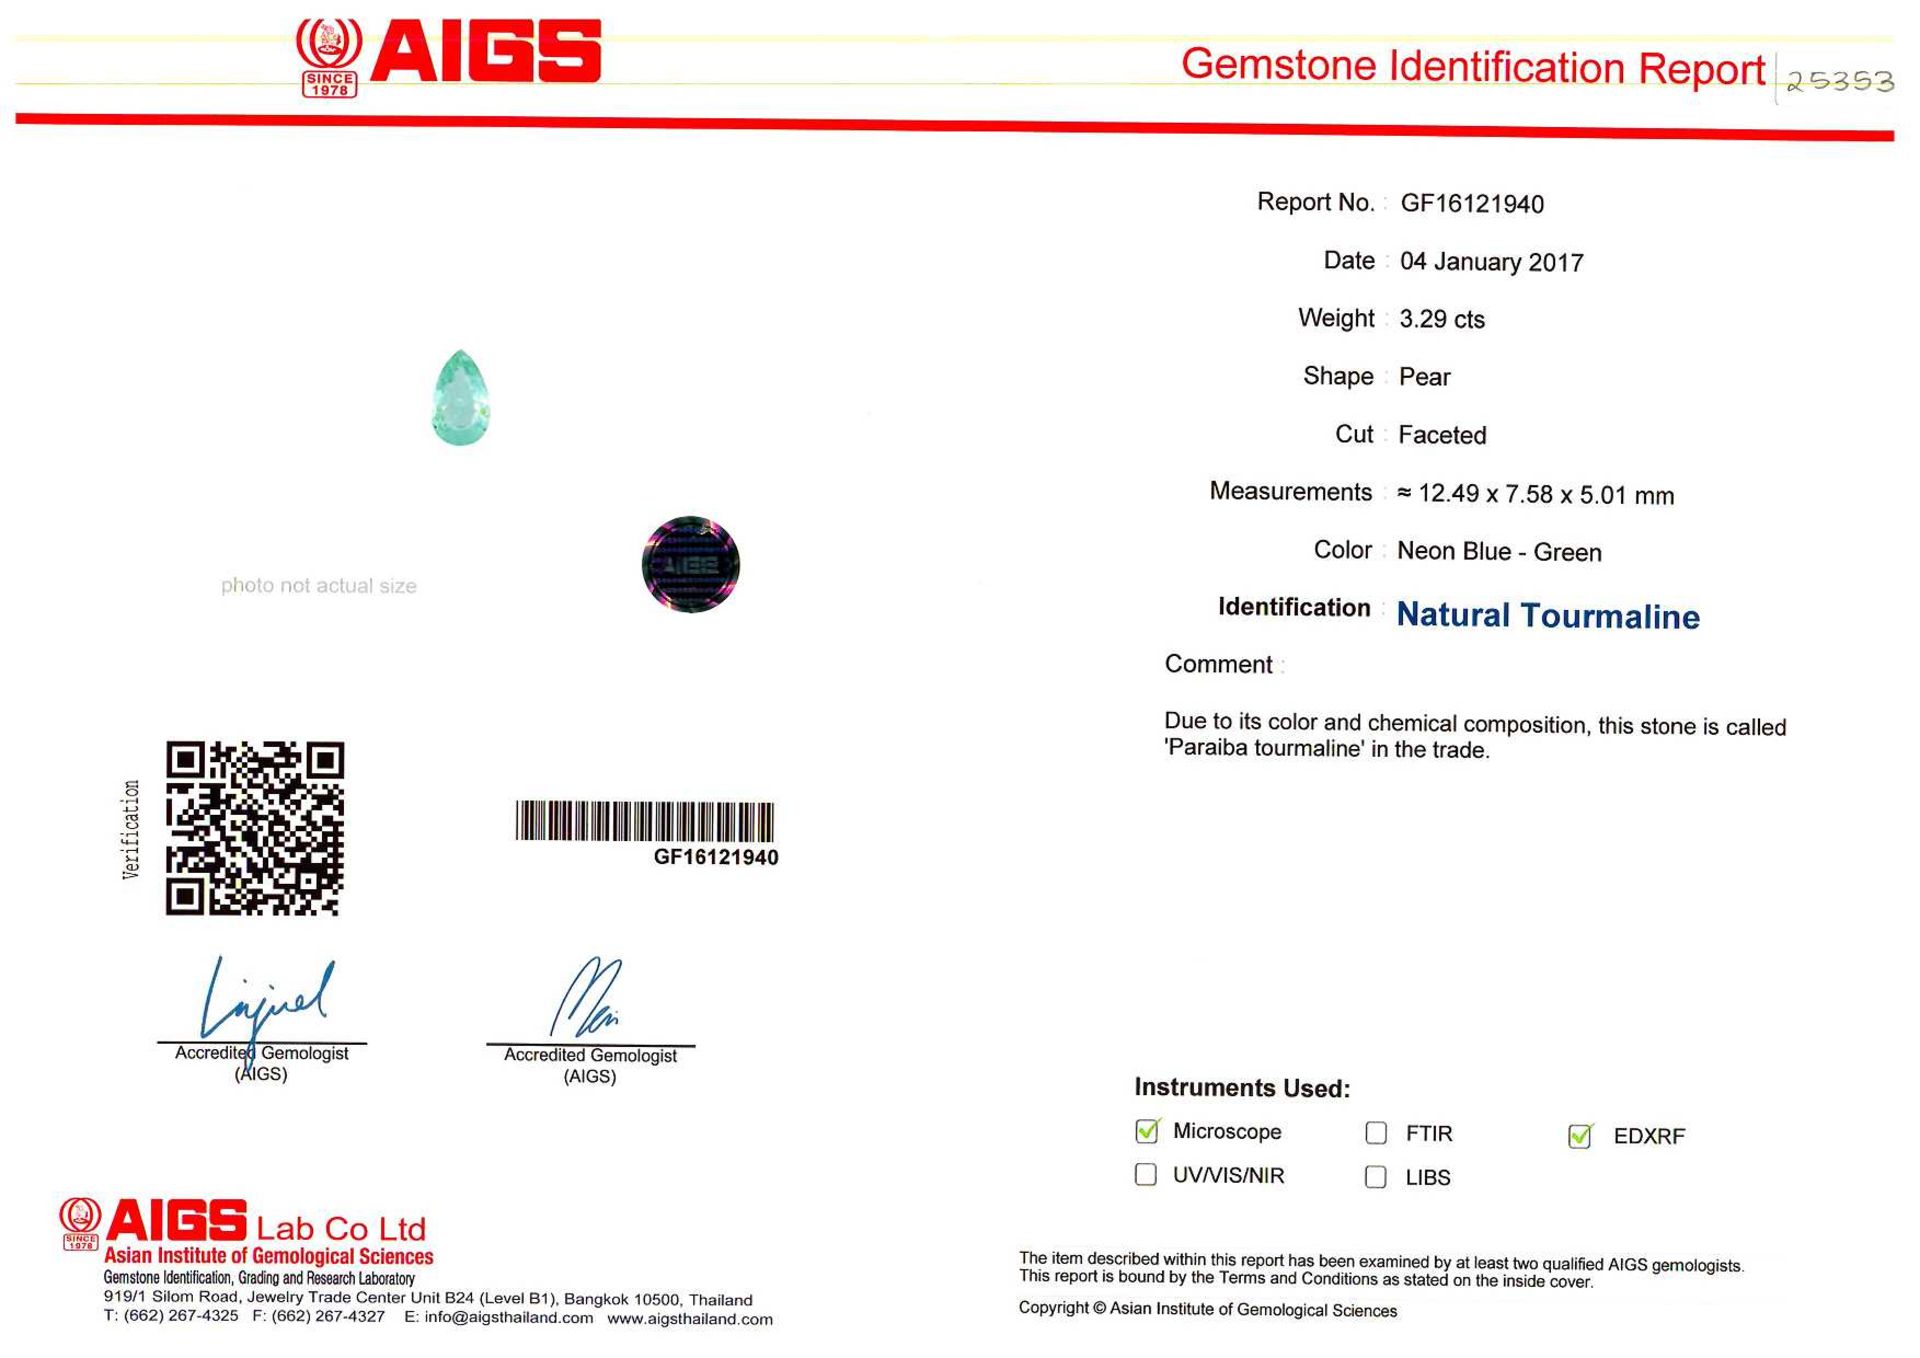 3.29ct pearshape Paraiba Tourmaline GIF certification GF16121940,appraisal 9950 - Image 2 of 2